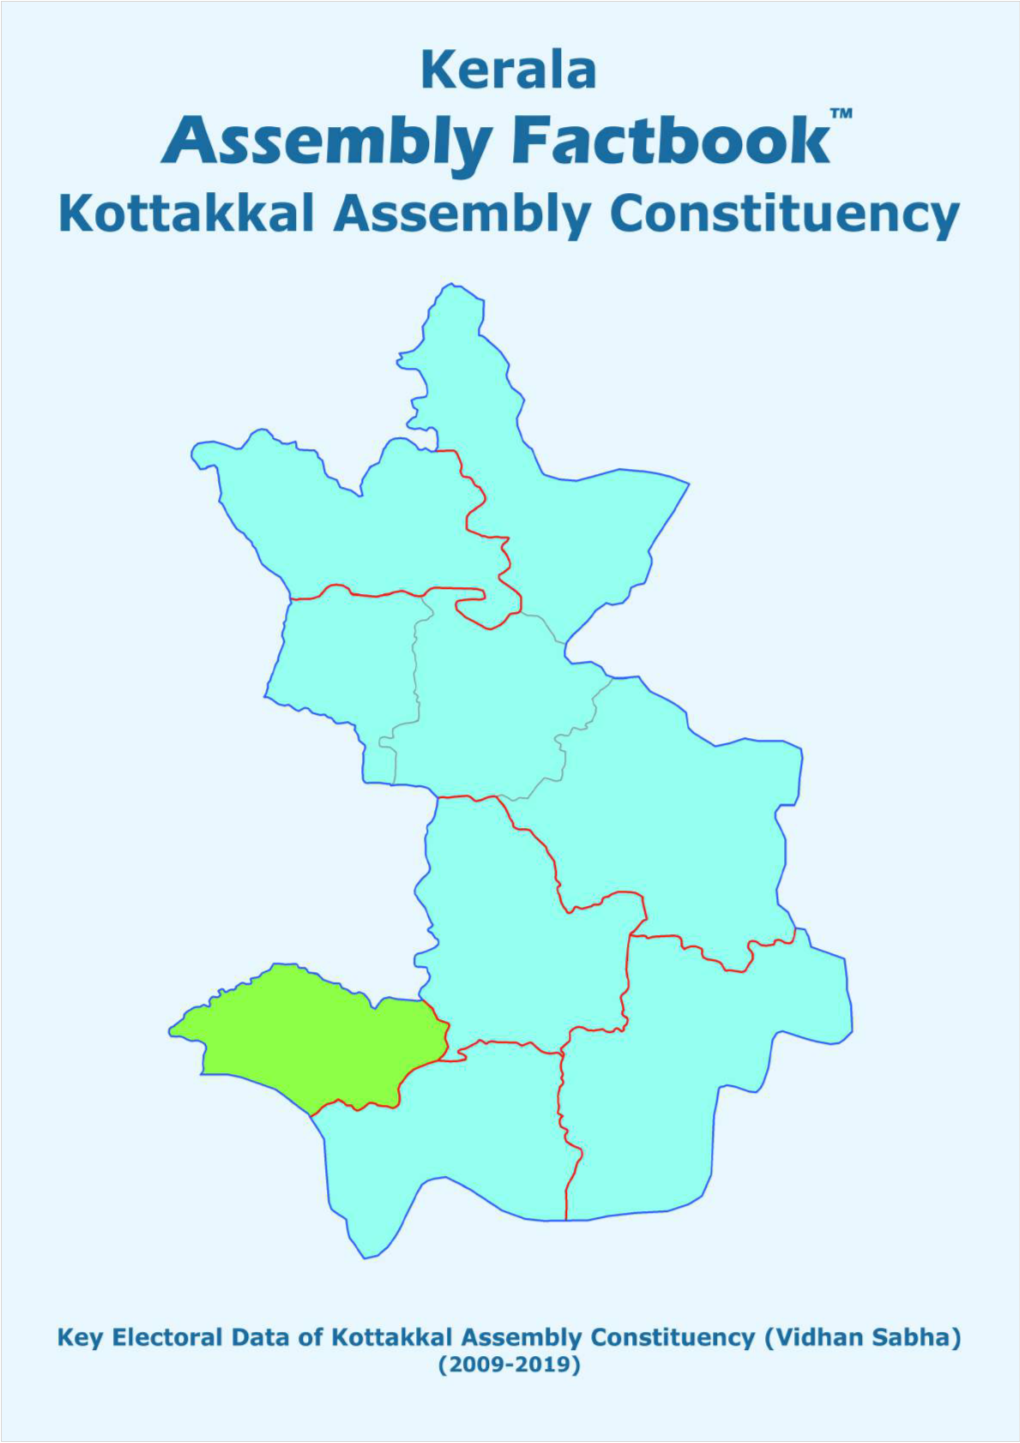 Kottakkal Assembly Kerala Factbook